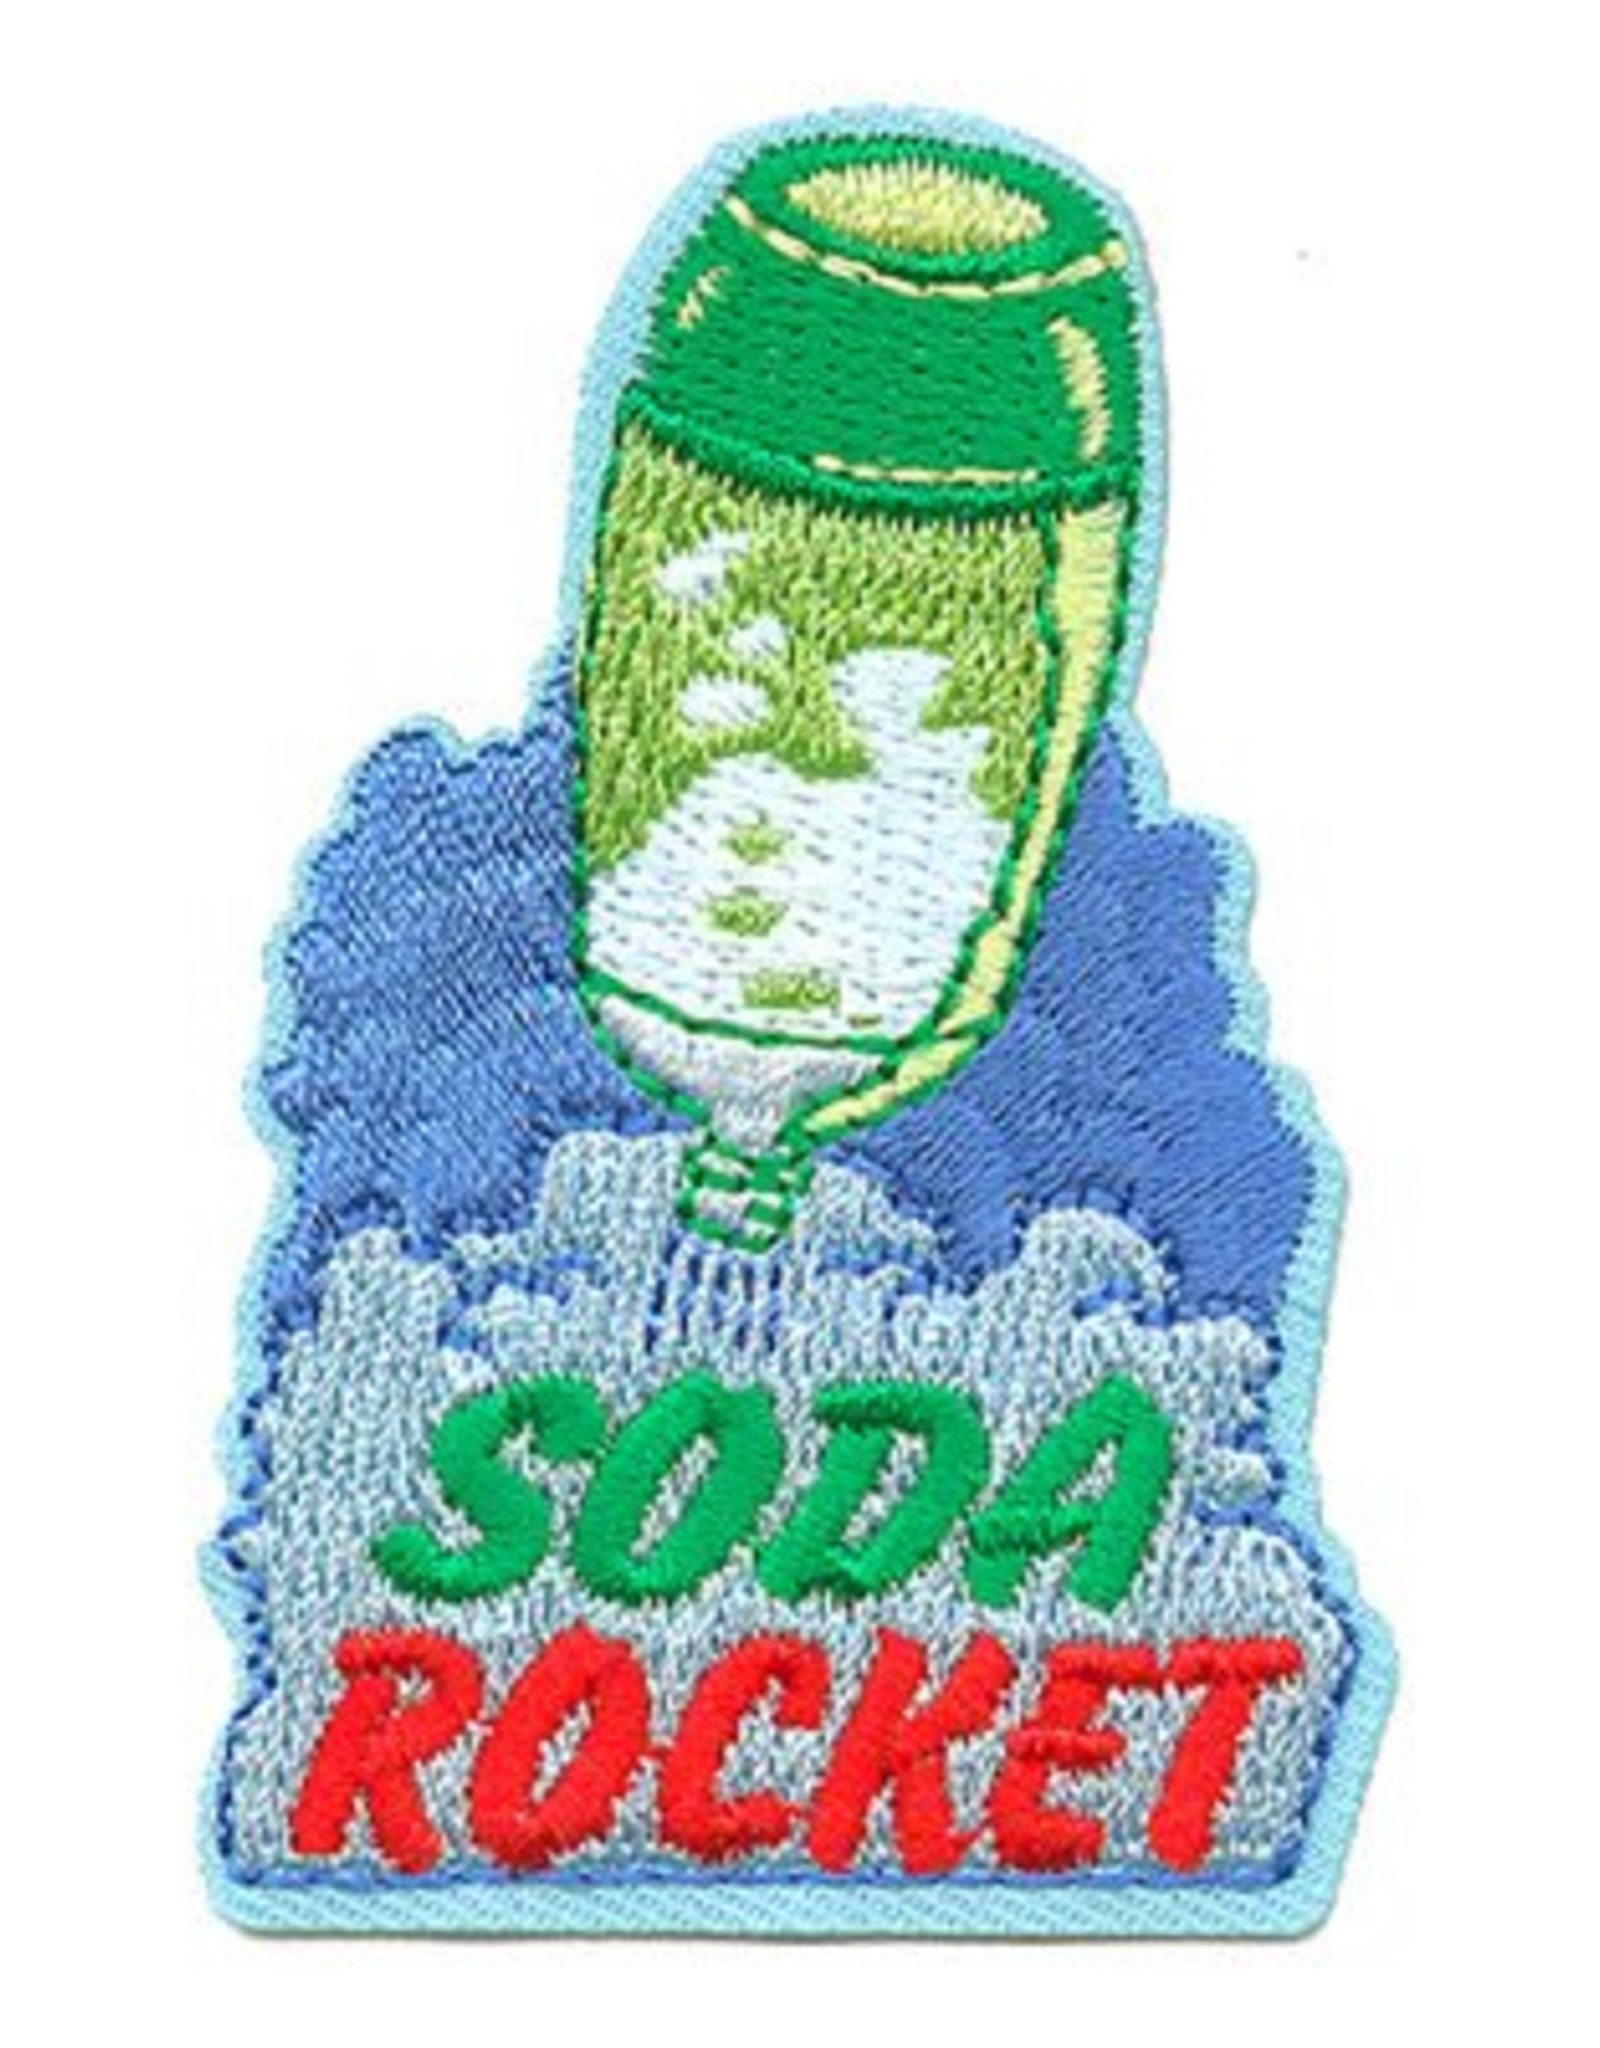 Advantage Emblem & Screen Prnt *Soda Bottle Rocket Fun Patch